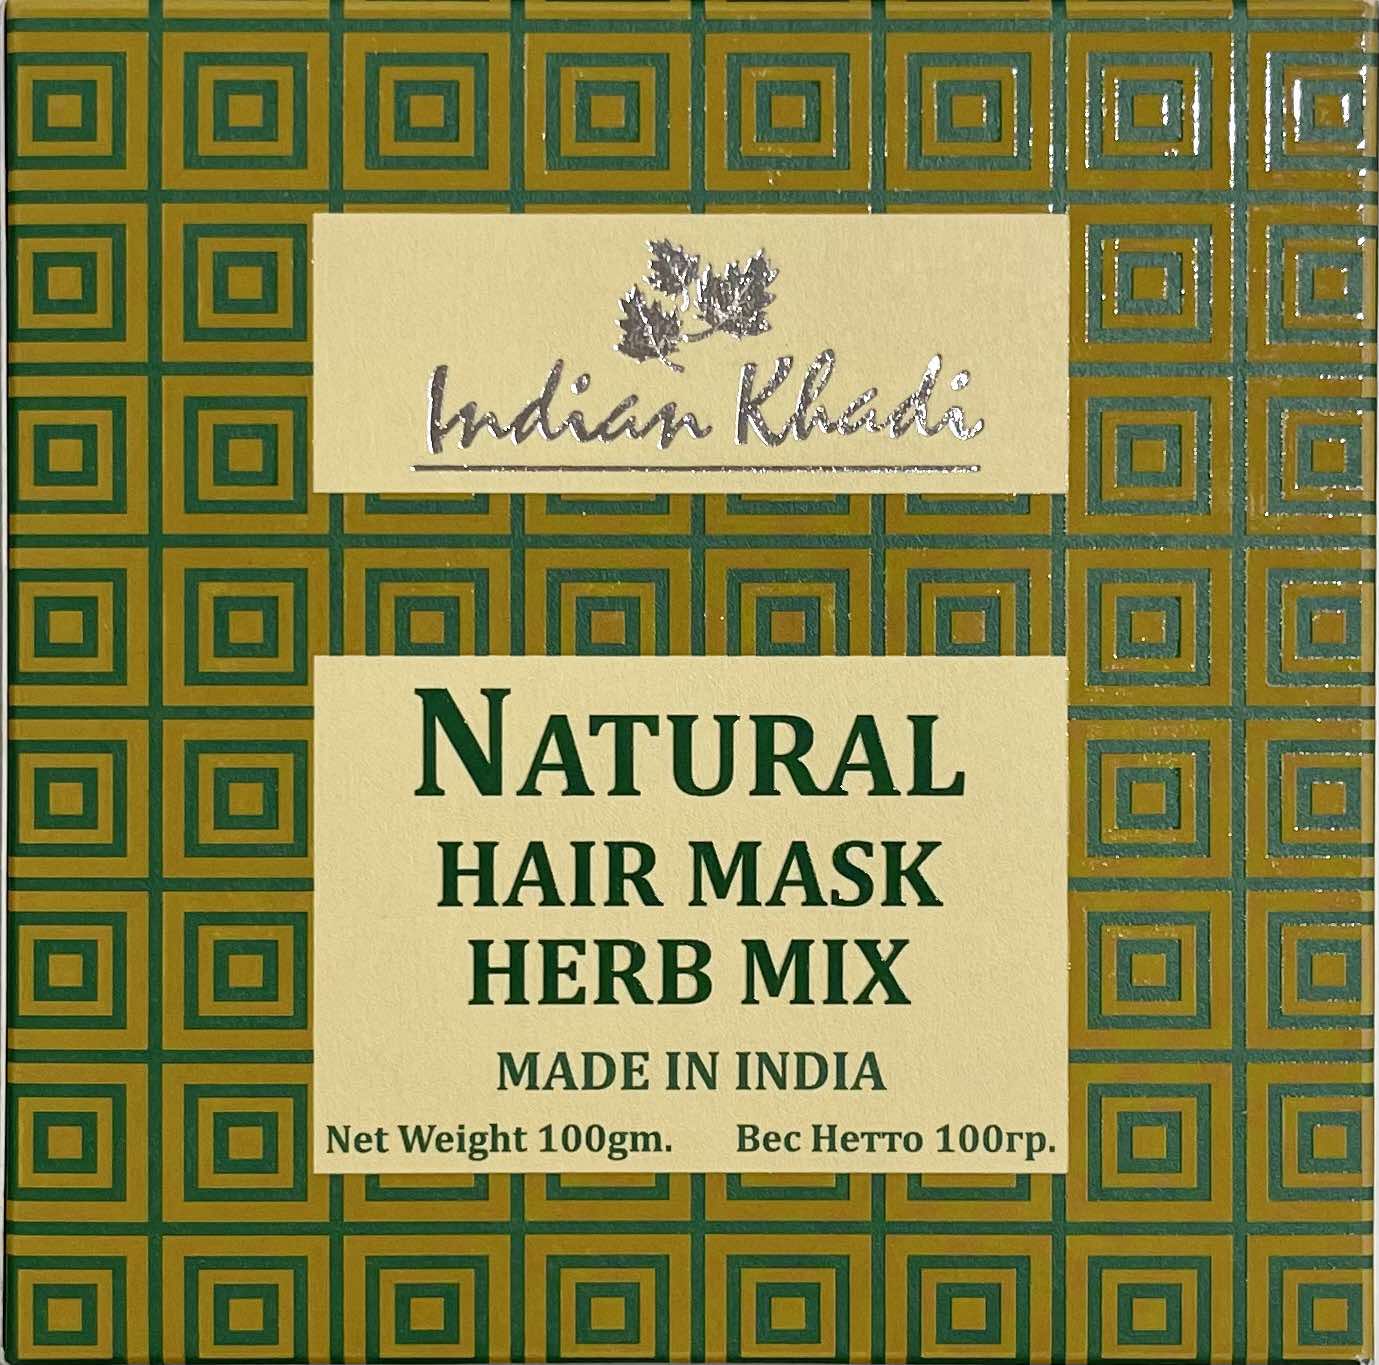 Natural Hair Mask HERB MIX, Indian Khadi (Натуральная травяная Восстанавливающая маска для волос, Индиан Кхади), 100 г.